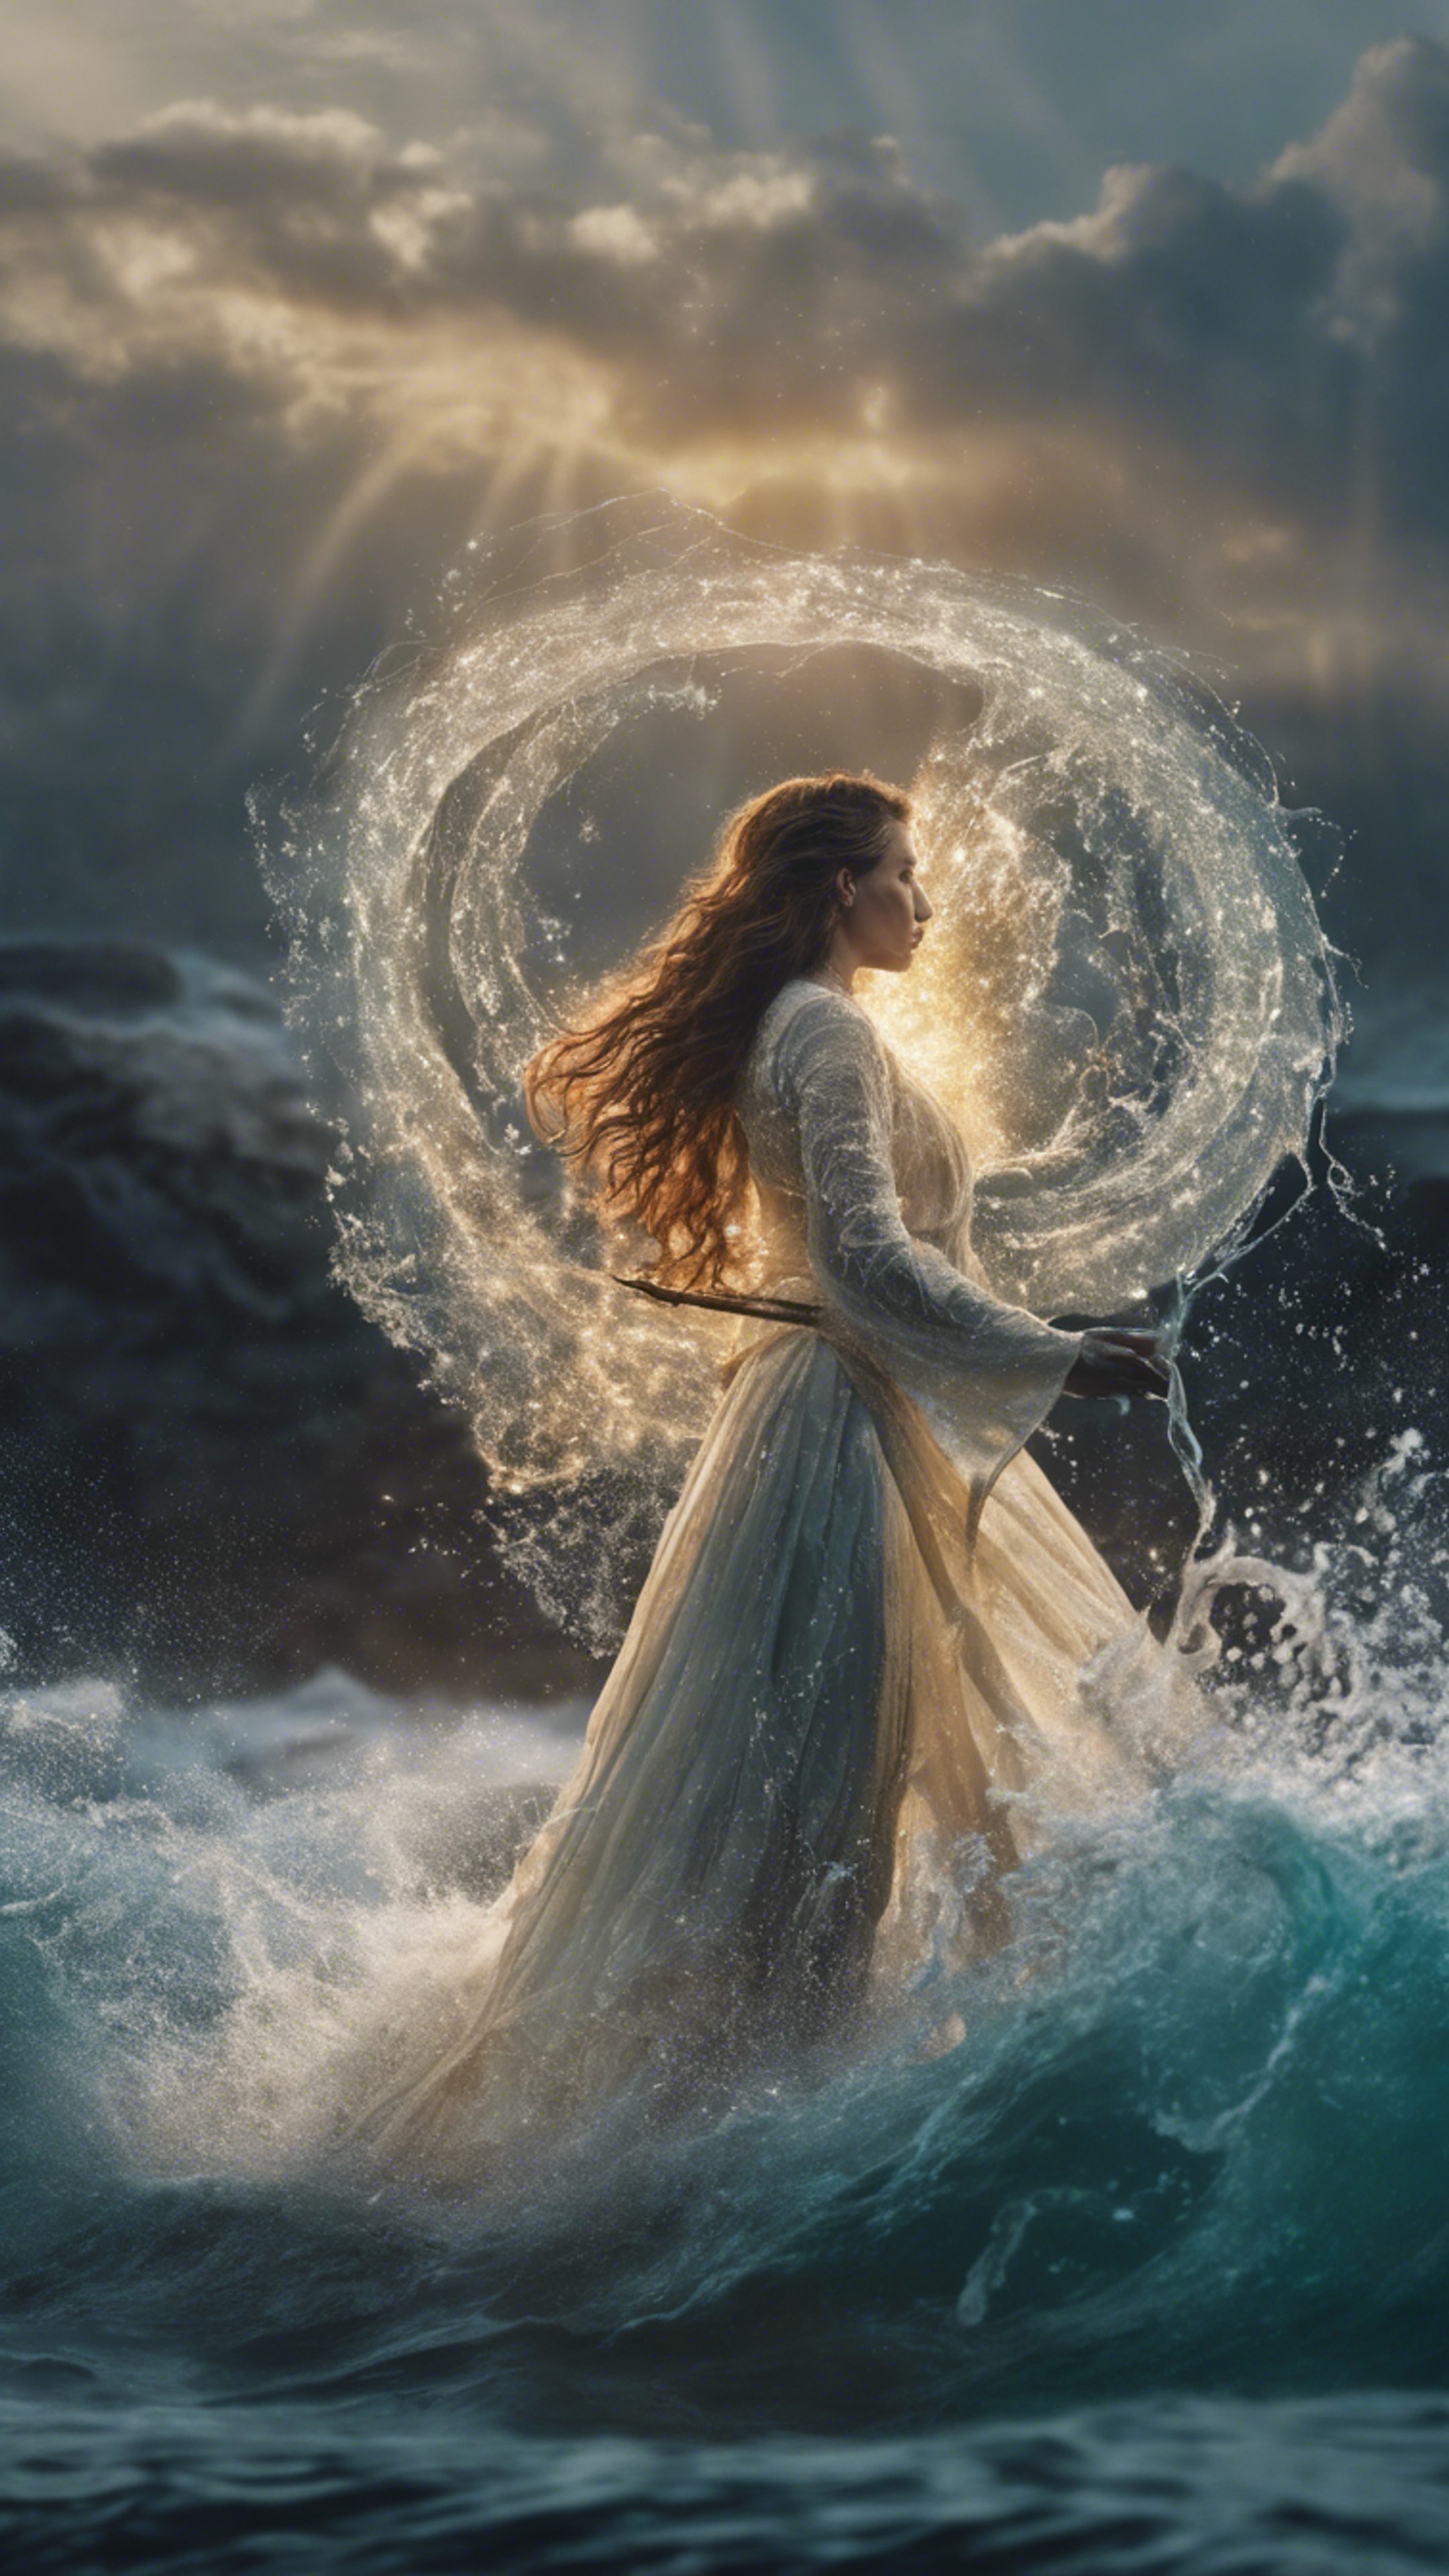 A magical woman weaving a spell that turns waves in an ocean into a gigantic water dragon. Tapeta na zeď[497501a1a9a040e18b41]